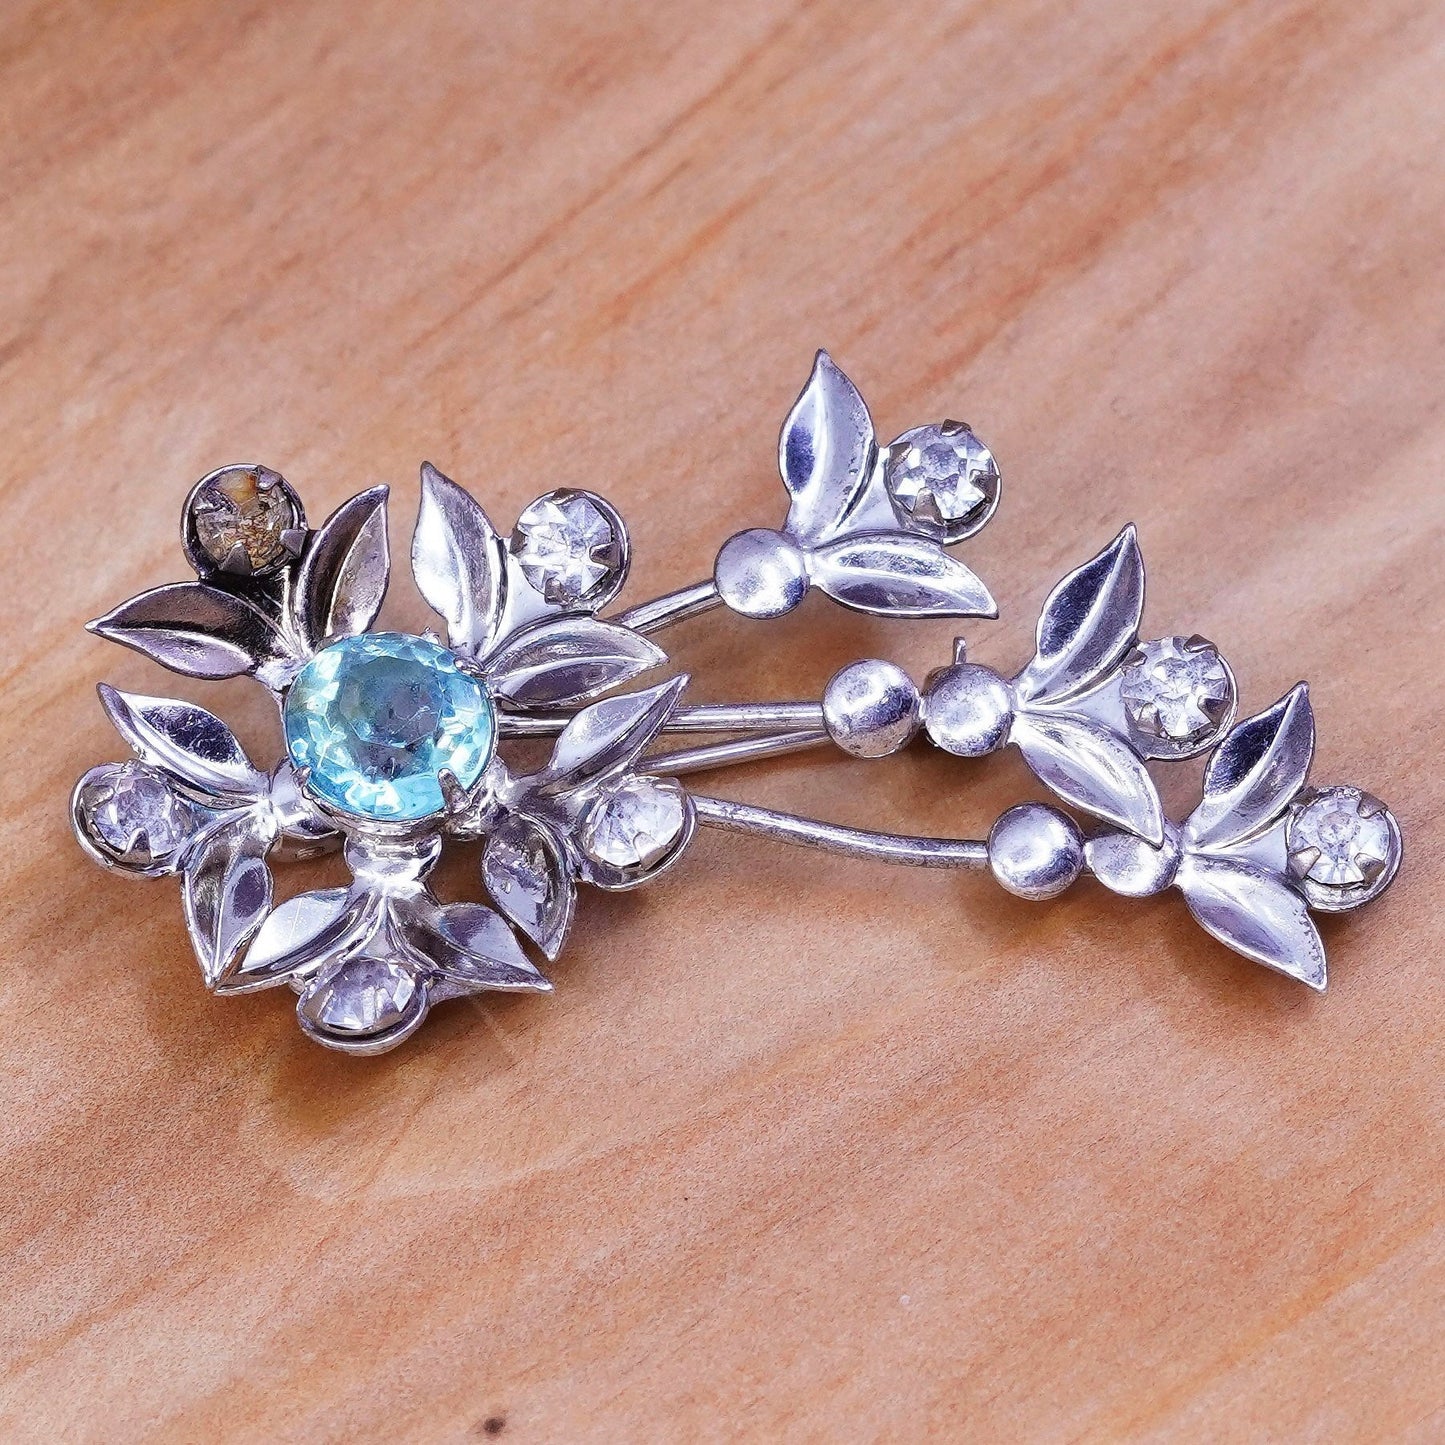 Vintage Art Deco handmade sterling 925 silver flower brooch with blue Crystal